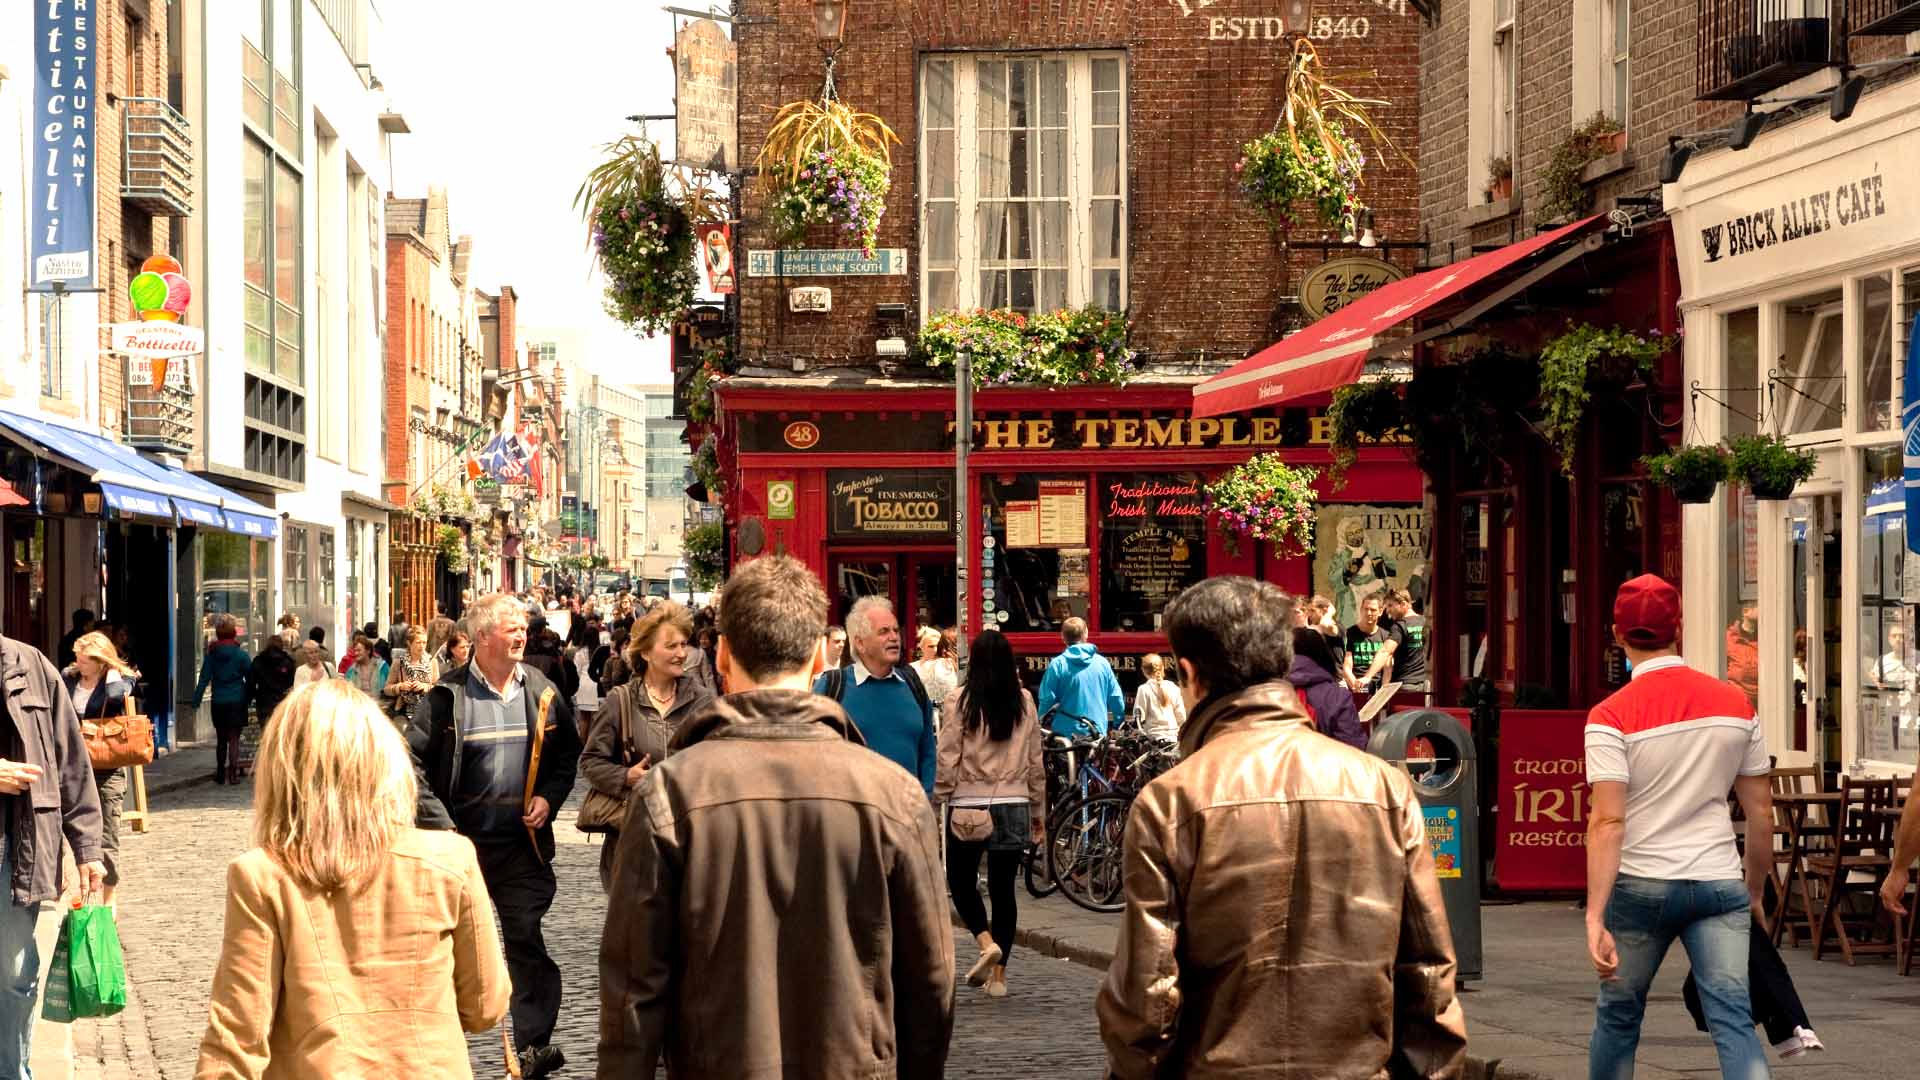 Dublin - Temple Bar district